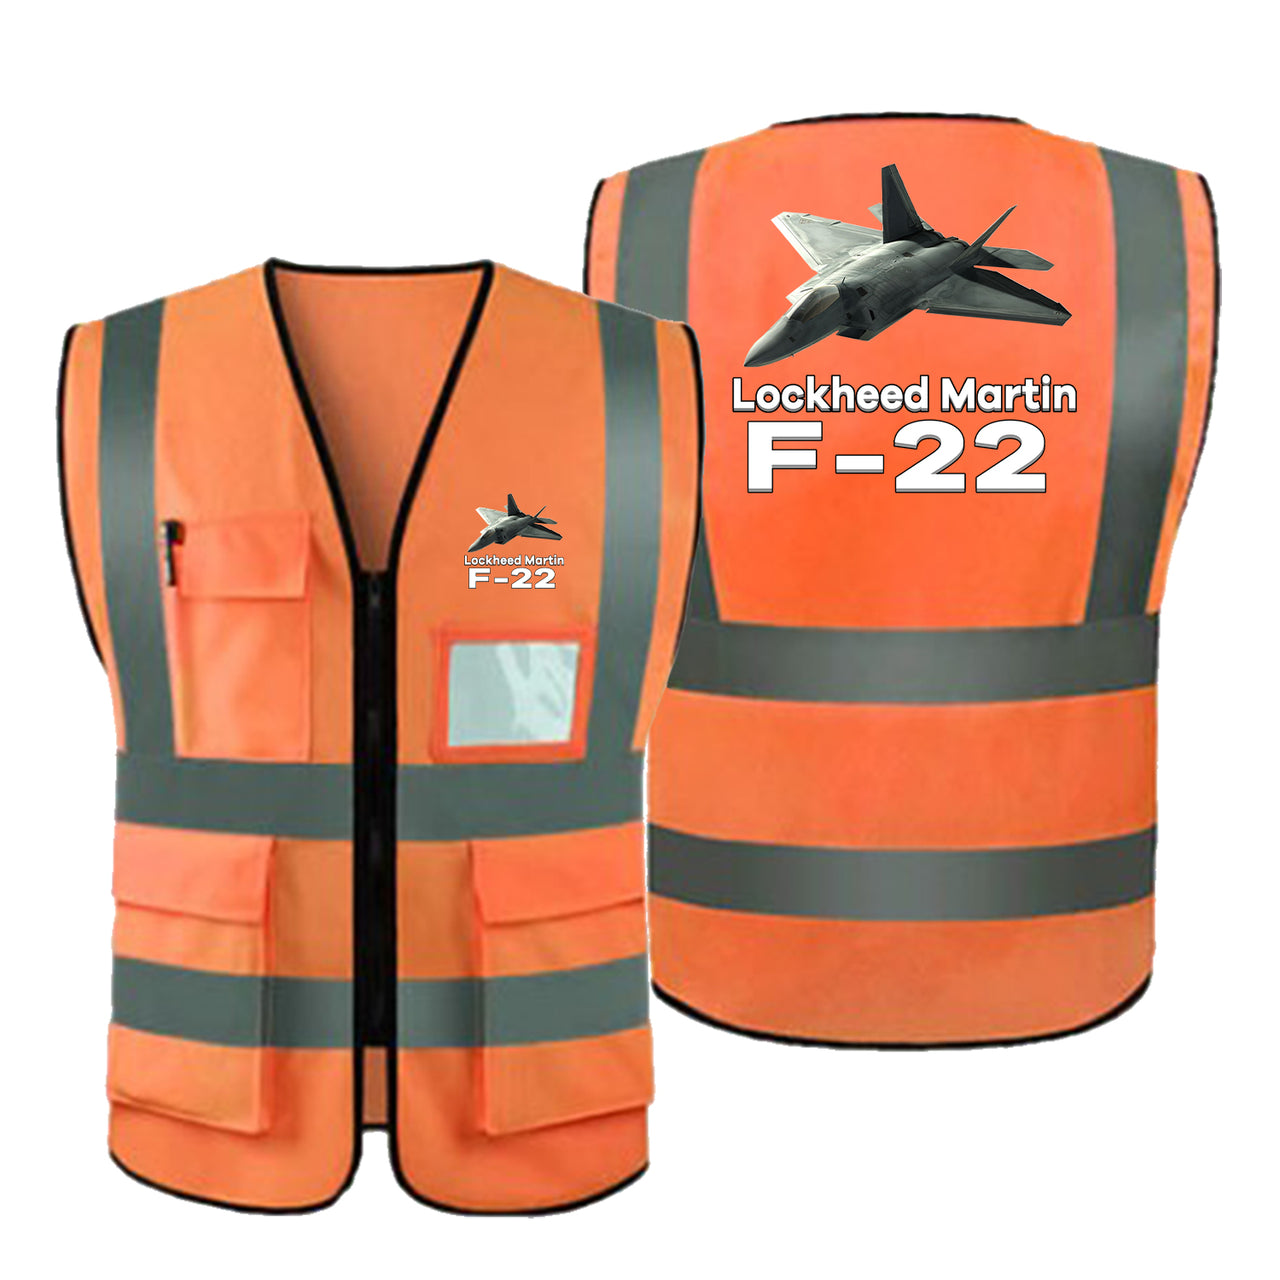 The Lockheed Martin F22 Designed Reflective Vests